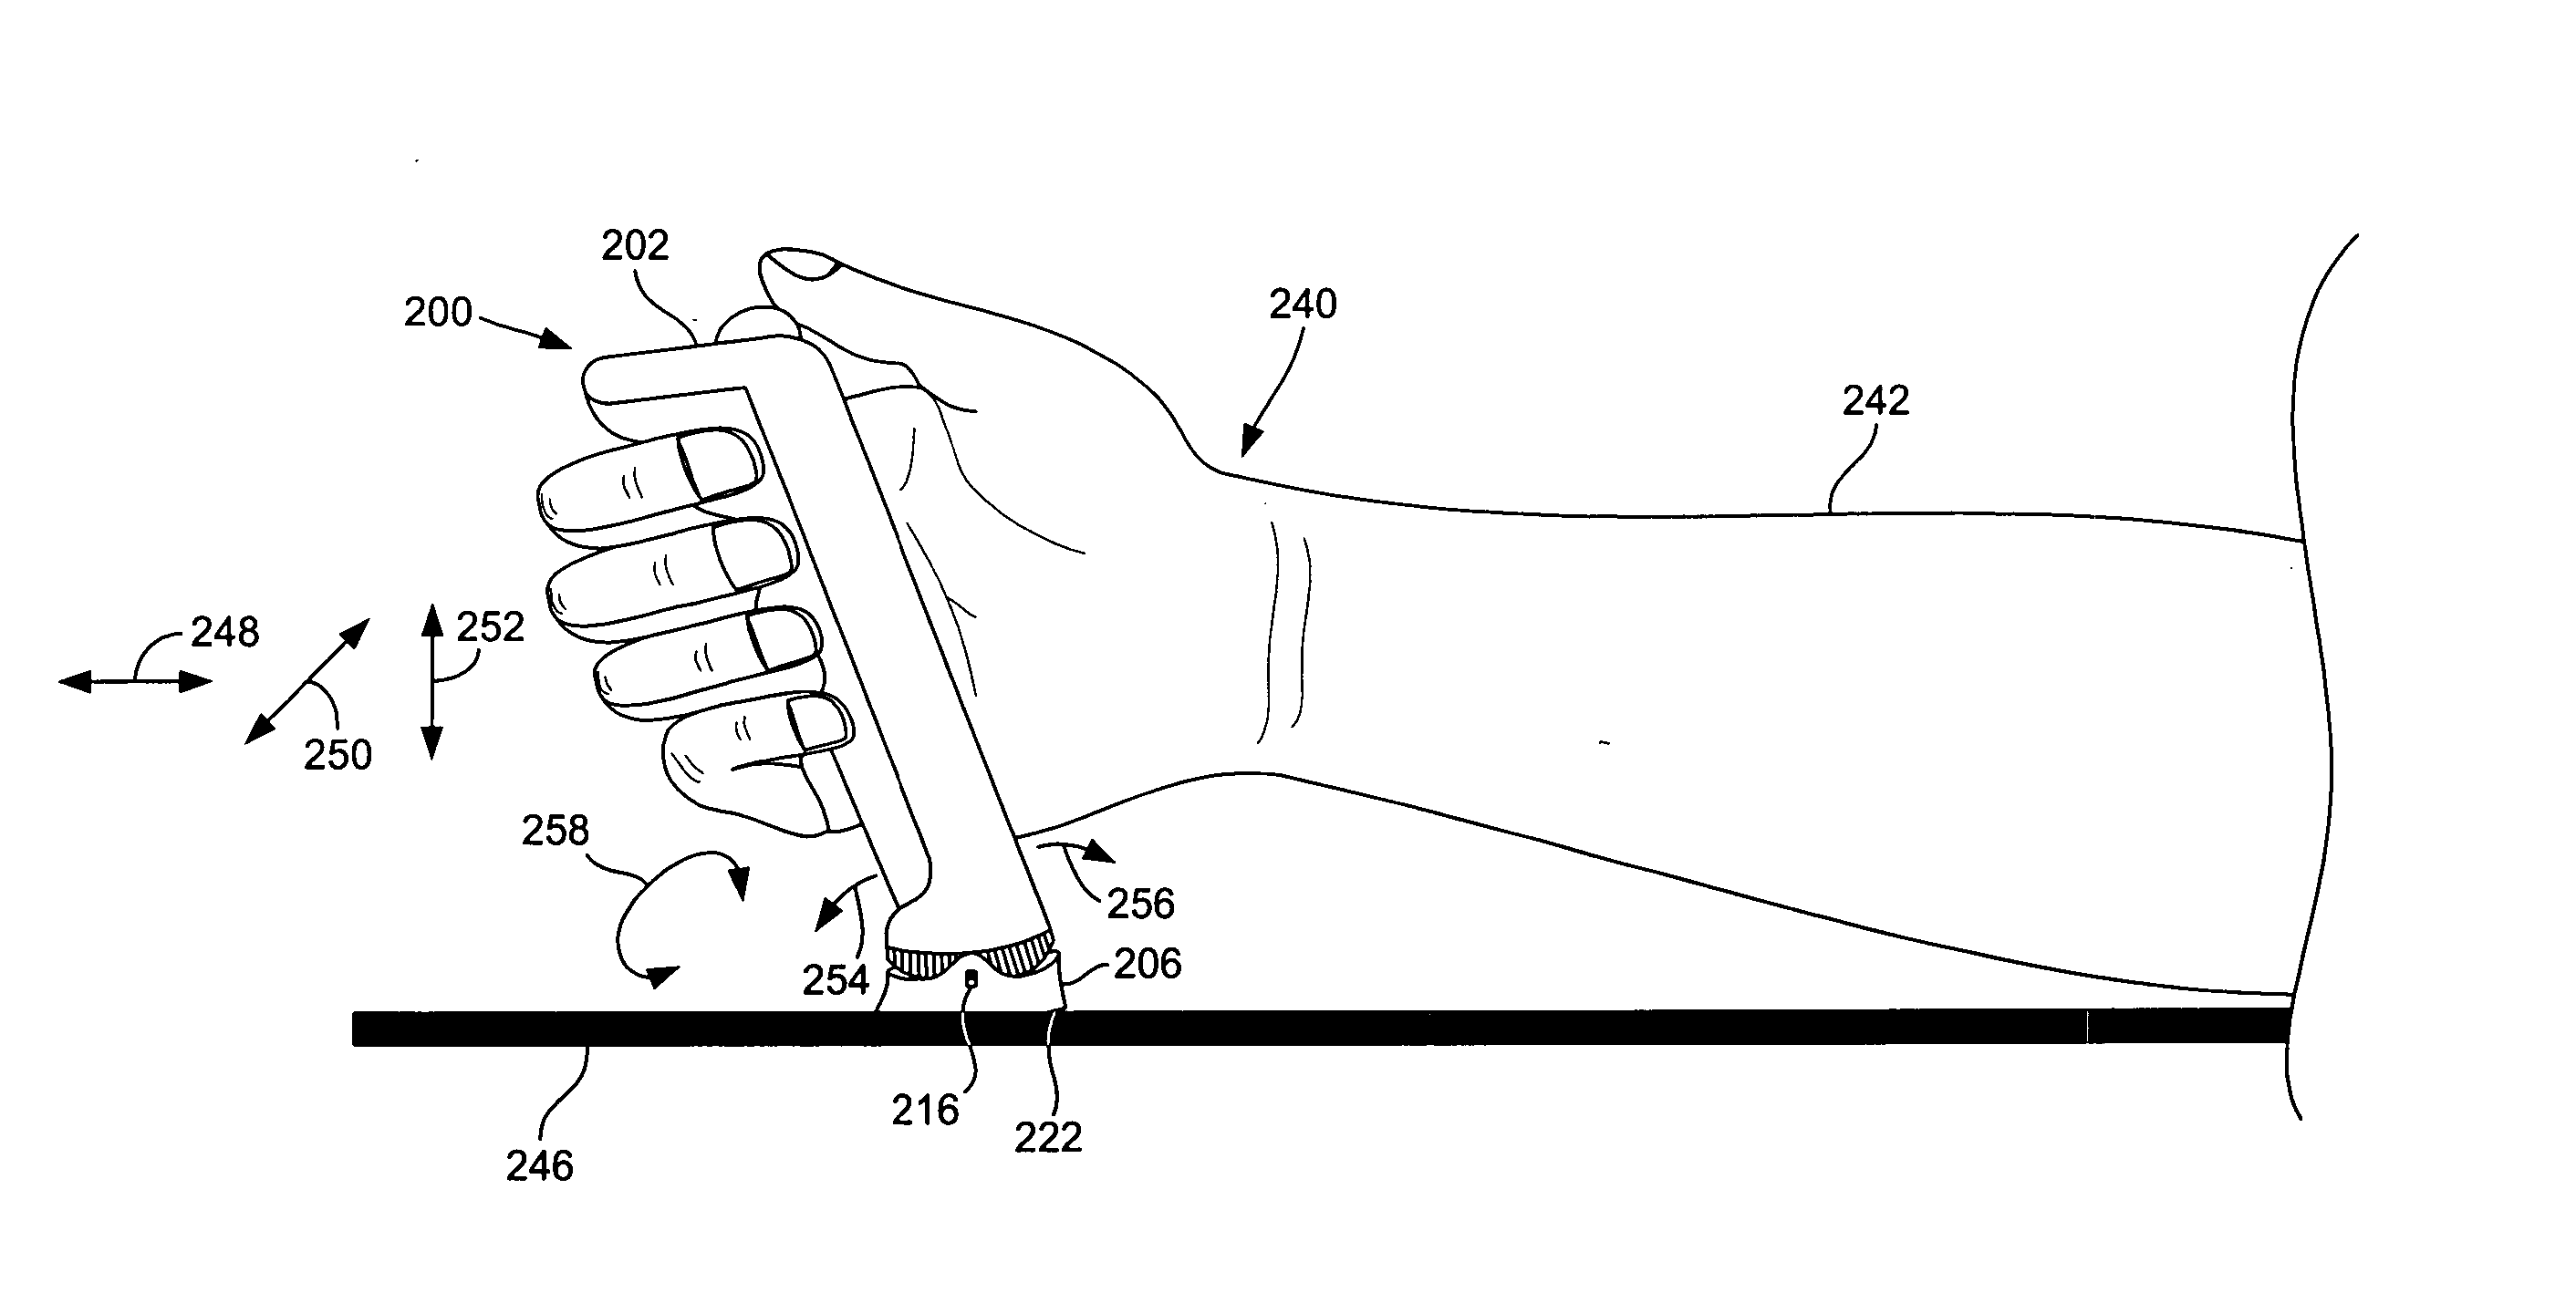 Ergonomic computer input device having pistol-type grip